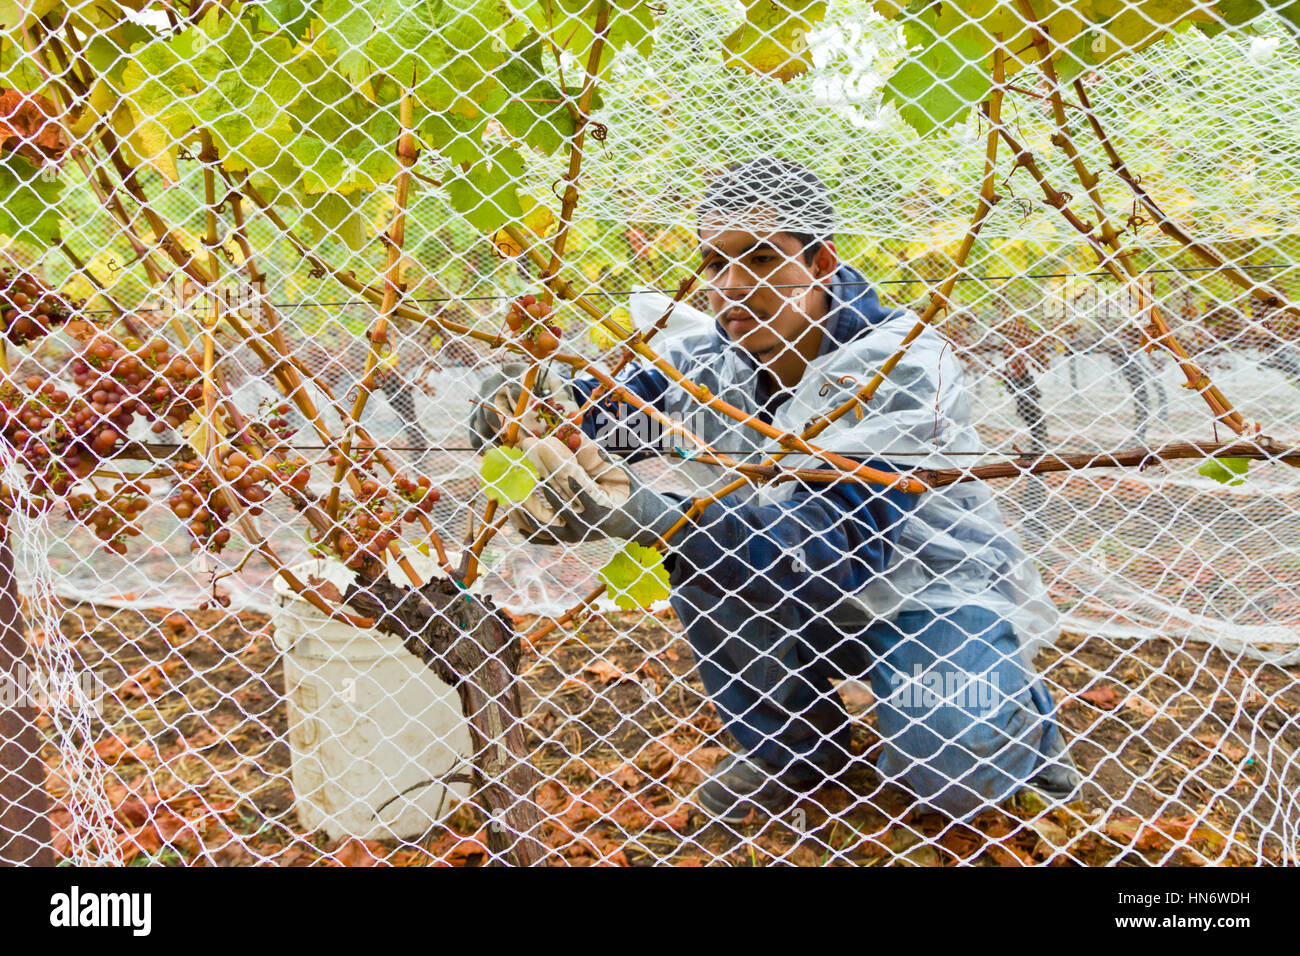 Mexican grape picker on the San Juan Islands, Washington State USA Stock Photo